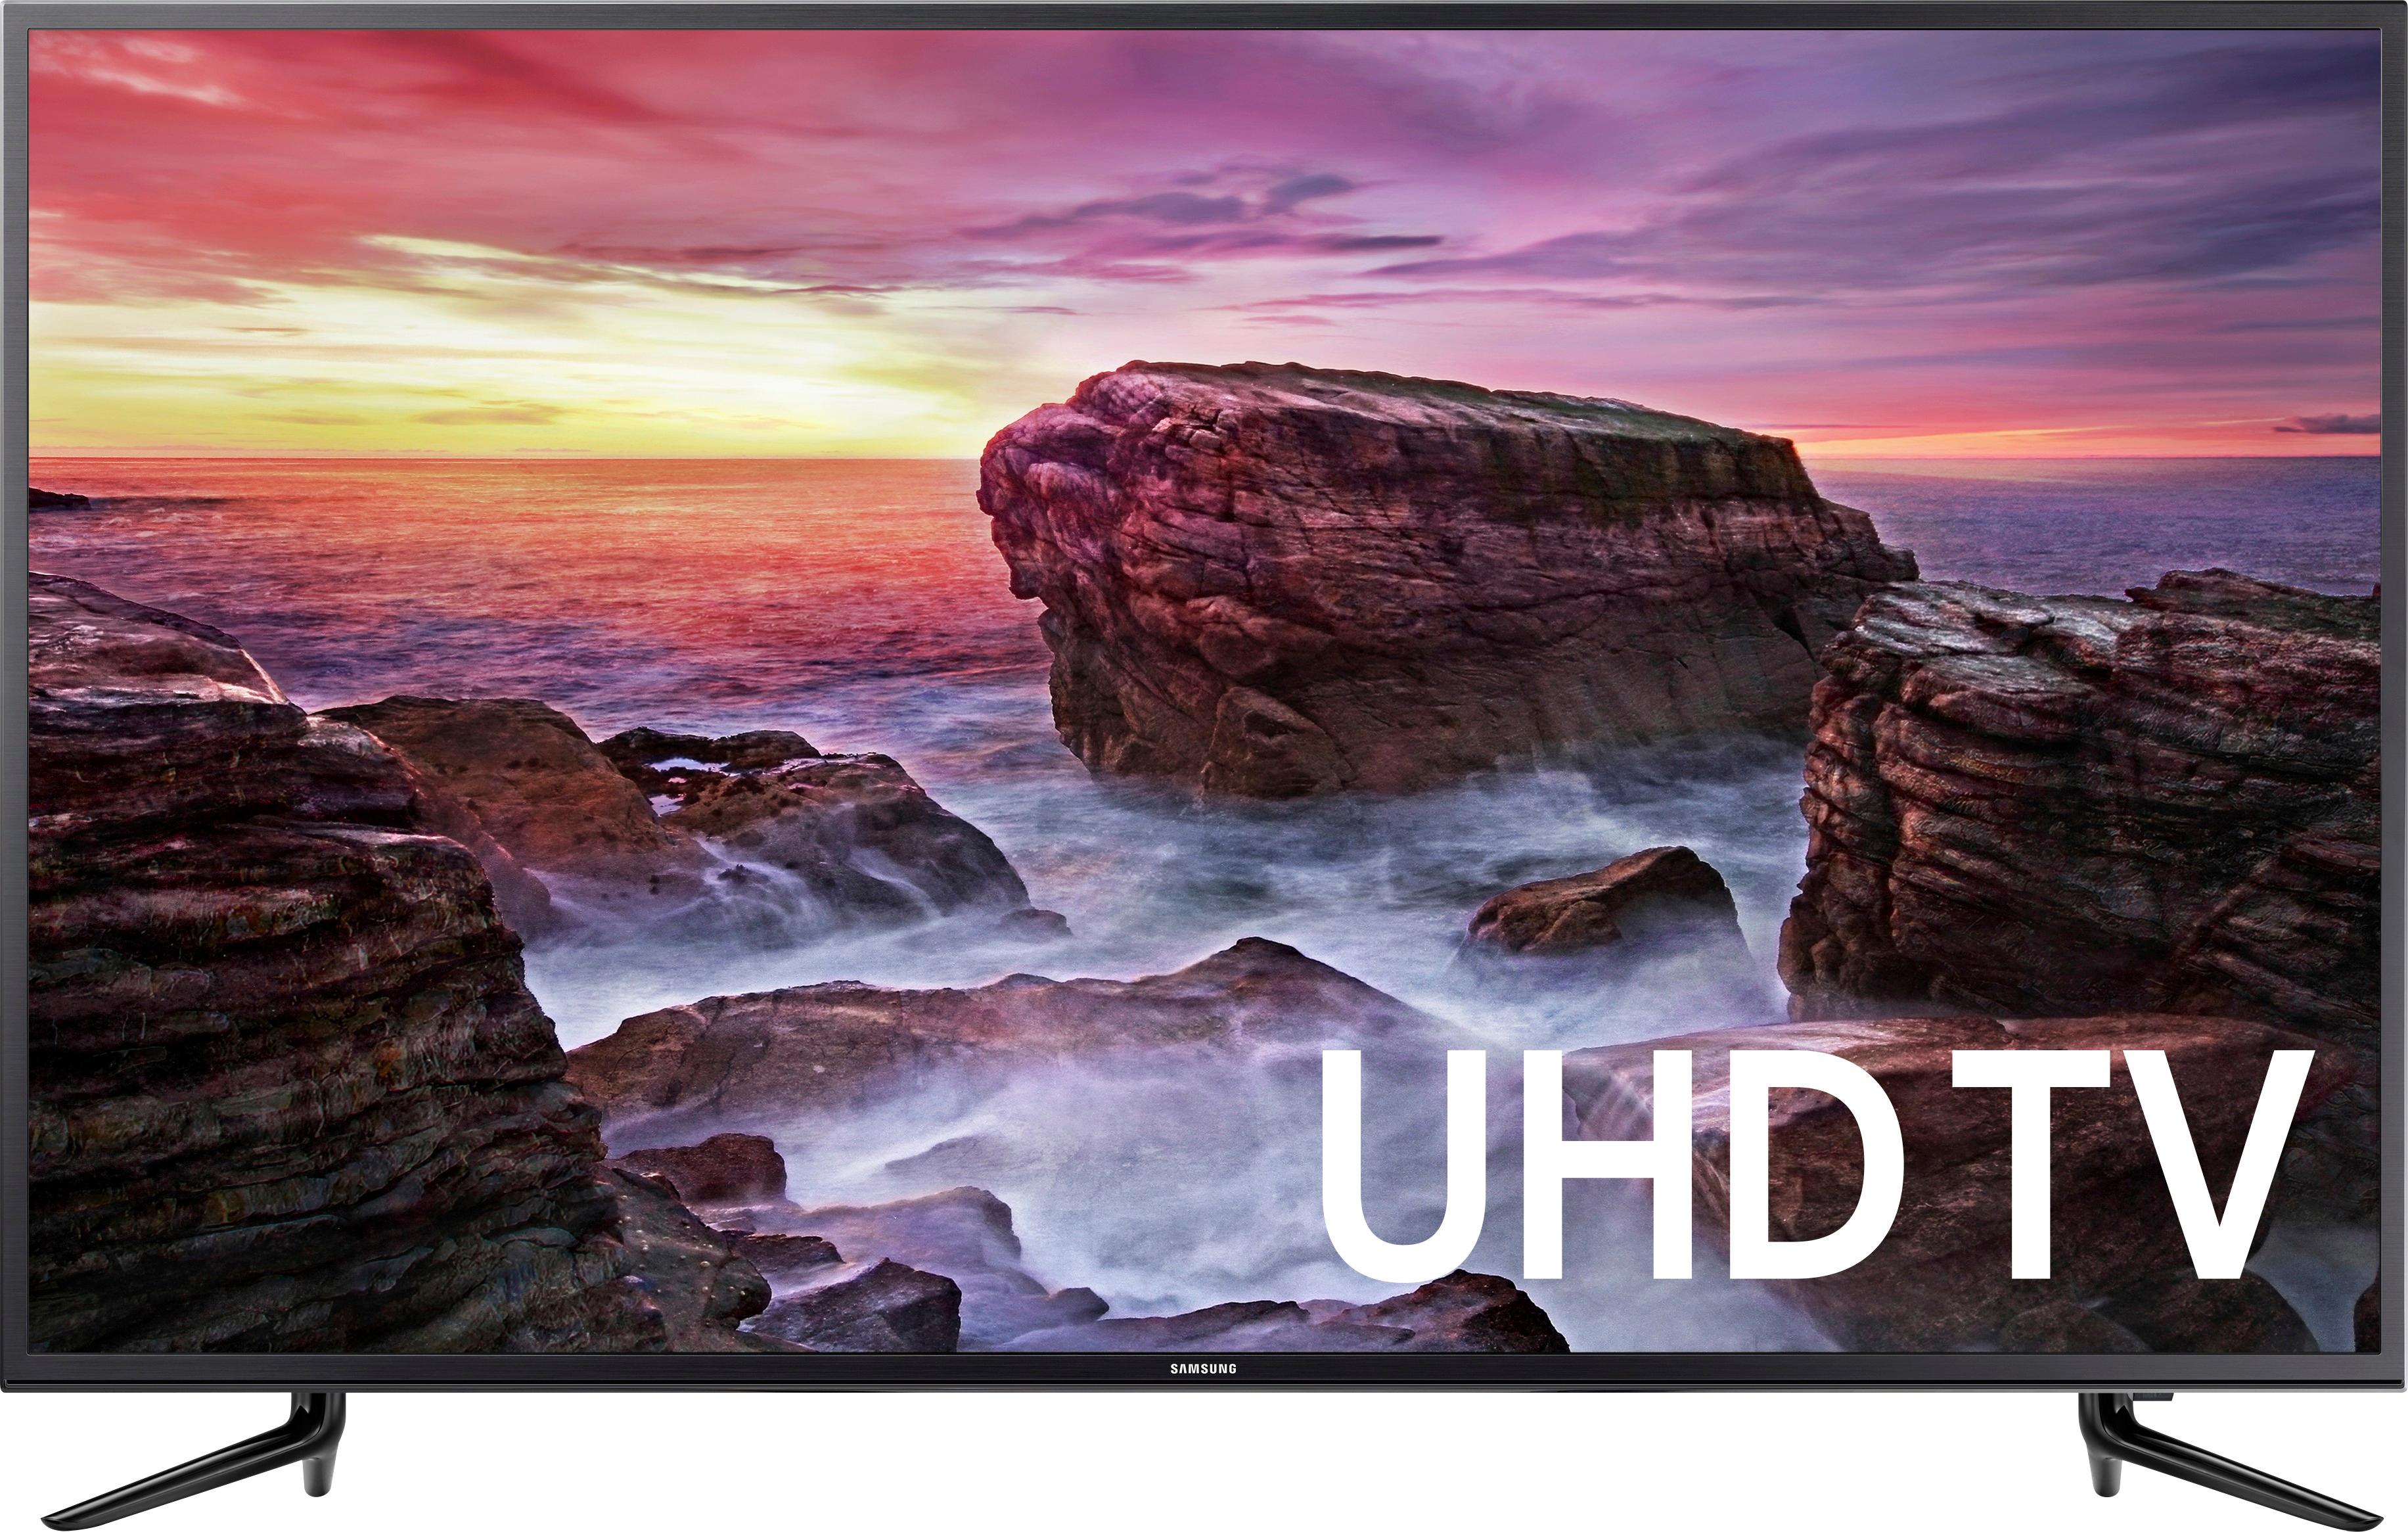 Samsung 58" Class LED MU6100 Series Smart 4K Ultra HD TV with UN58MU6100FXZA - Best